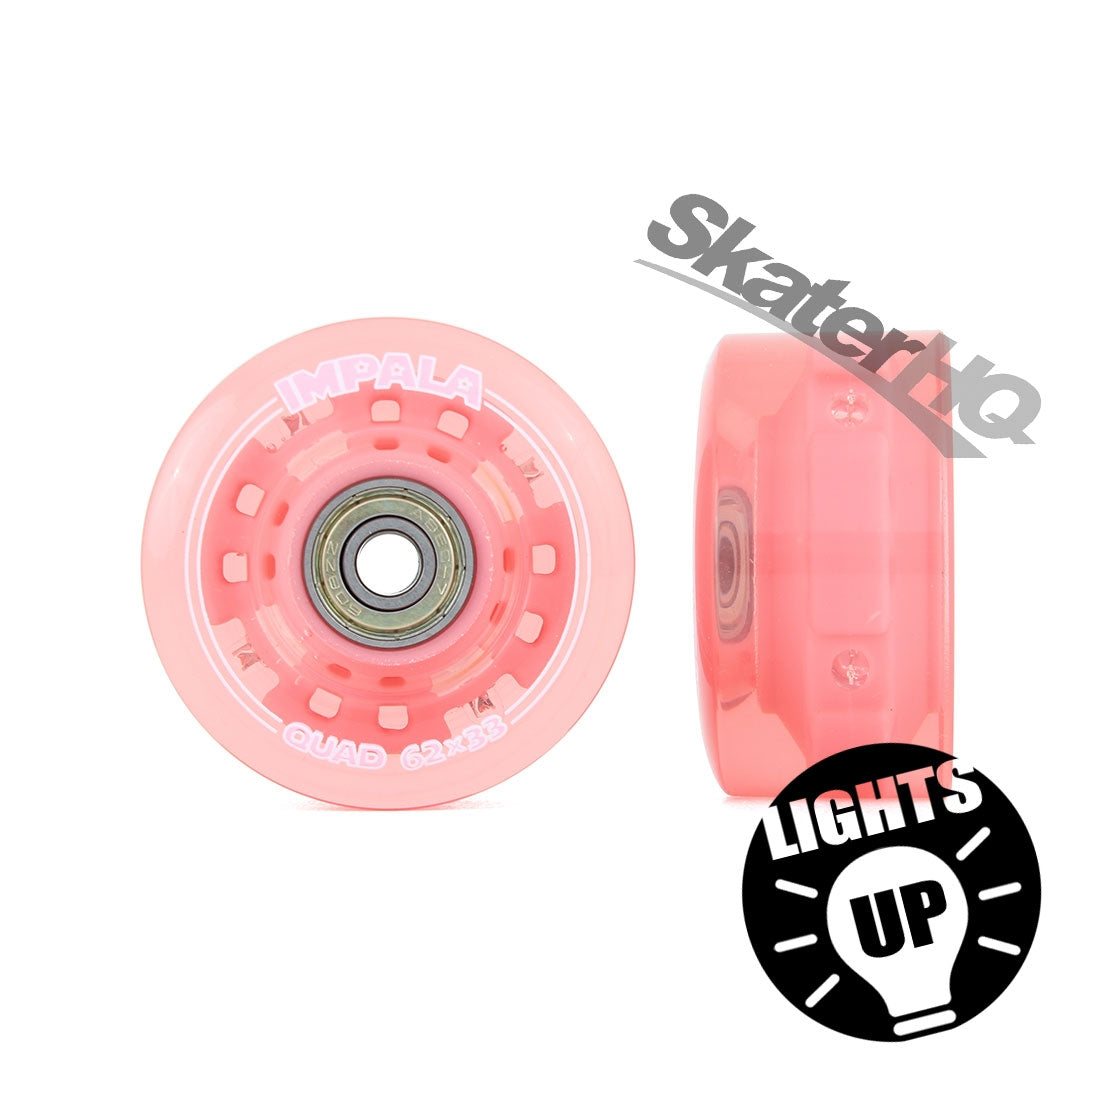 Impala LED 62x33mm 4pk - Pink Roller Skate Wheels